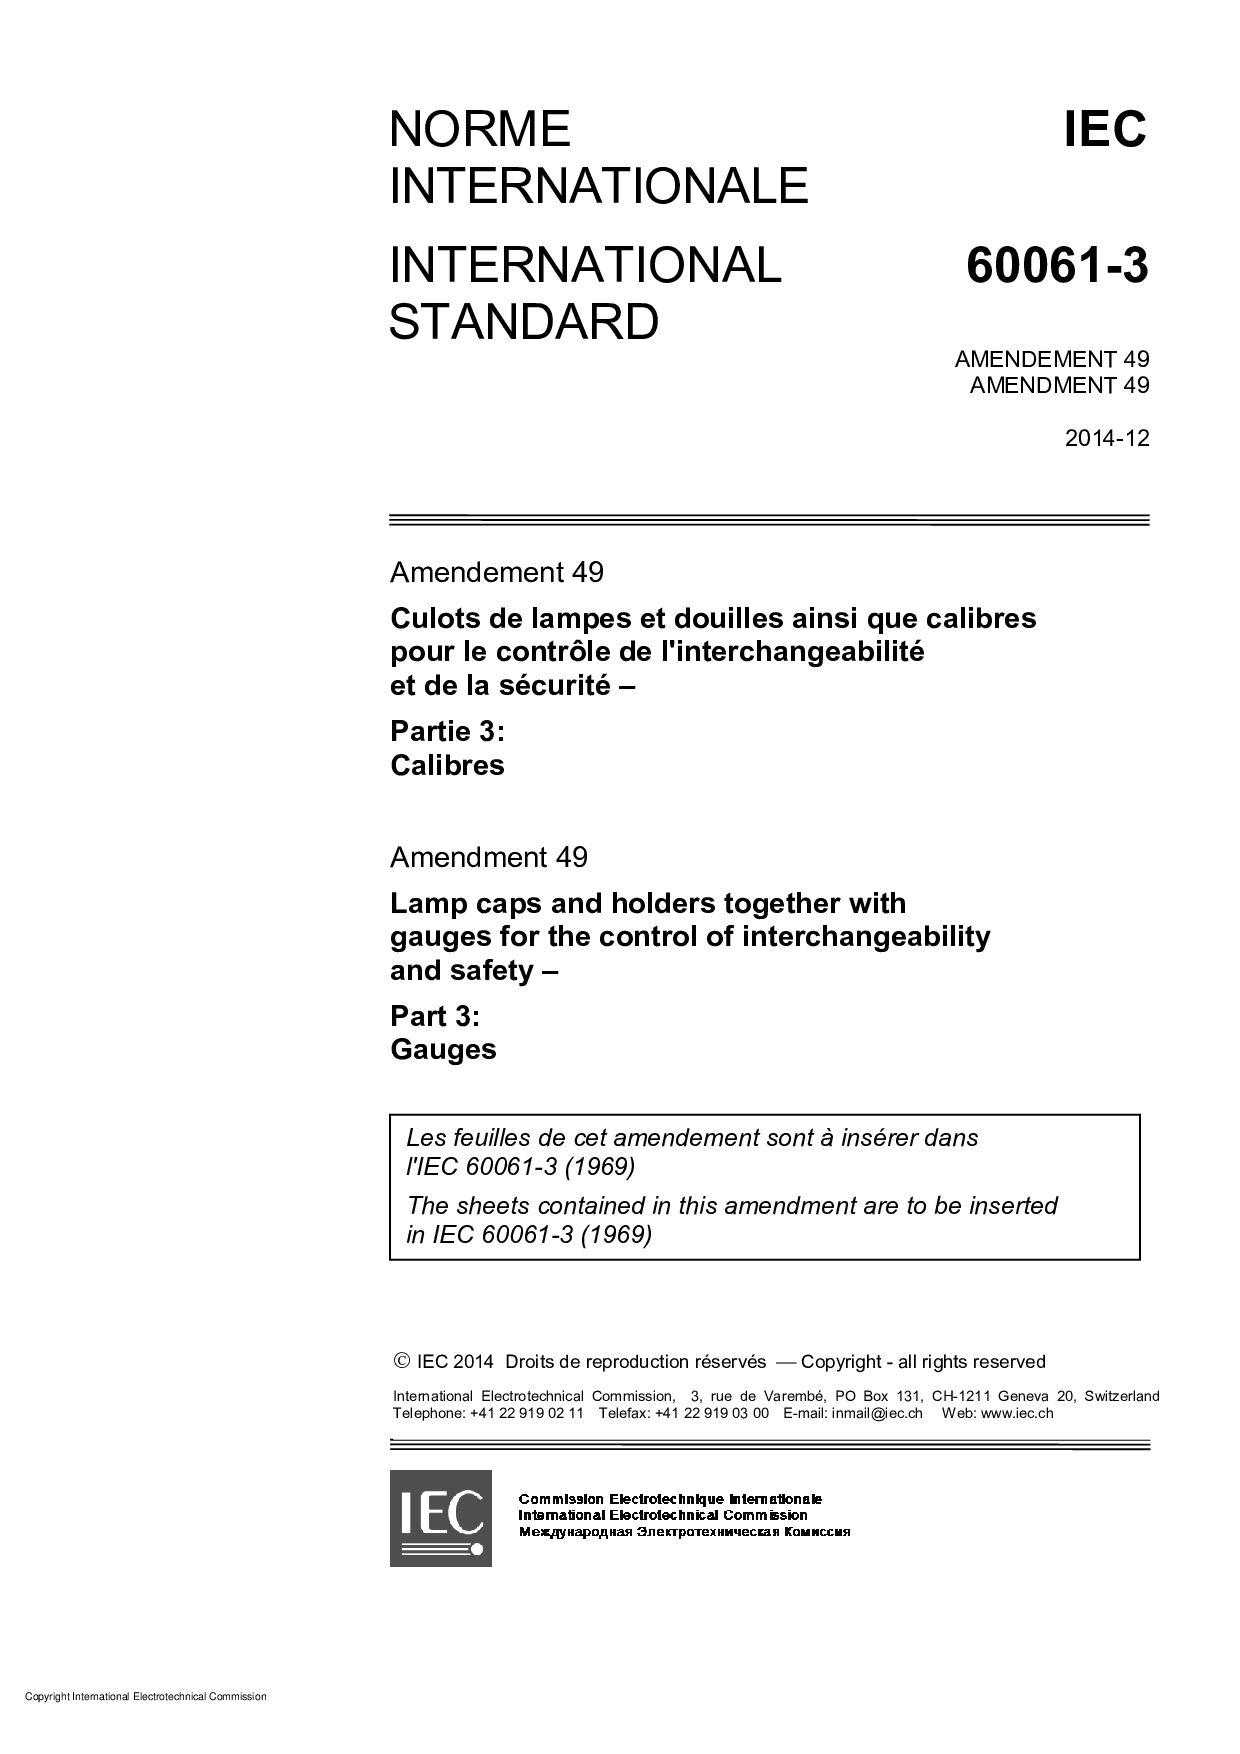 IEC 60061-3:1969/AMD49:2014封面图